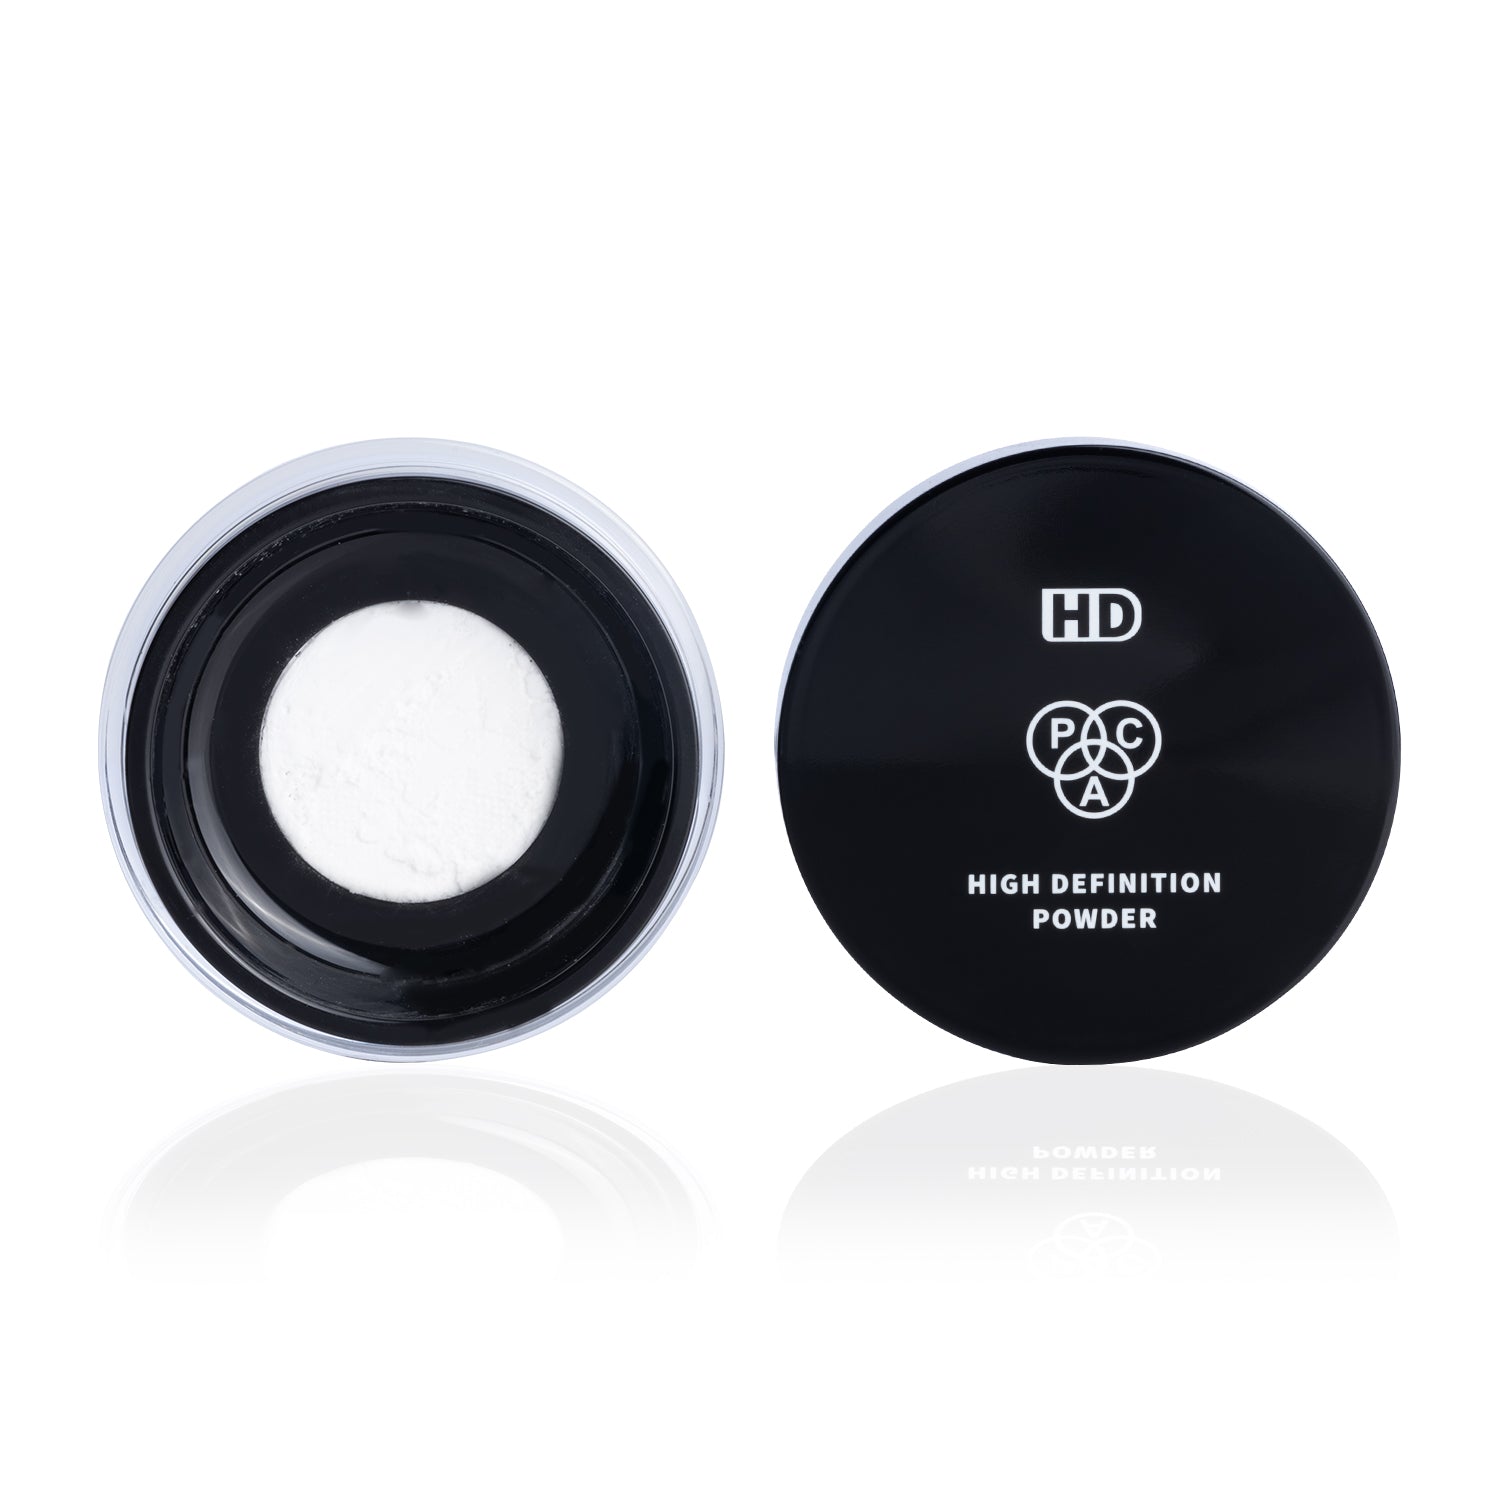 PAC Cosmetics HD Powder #Size_ 8gm+#Color_Transparent